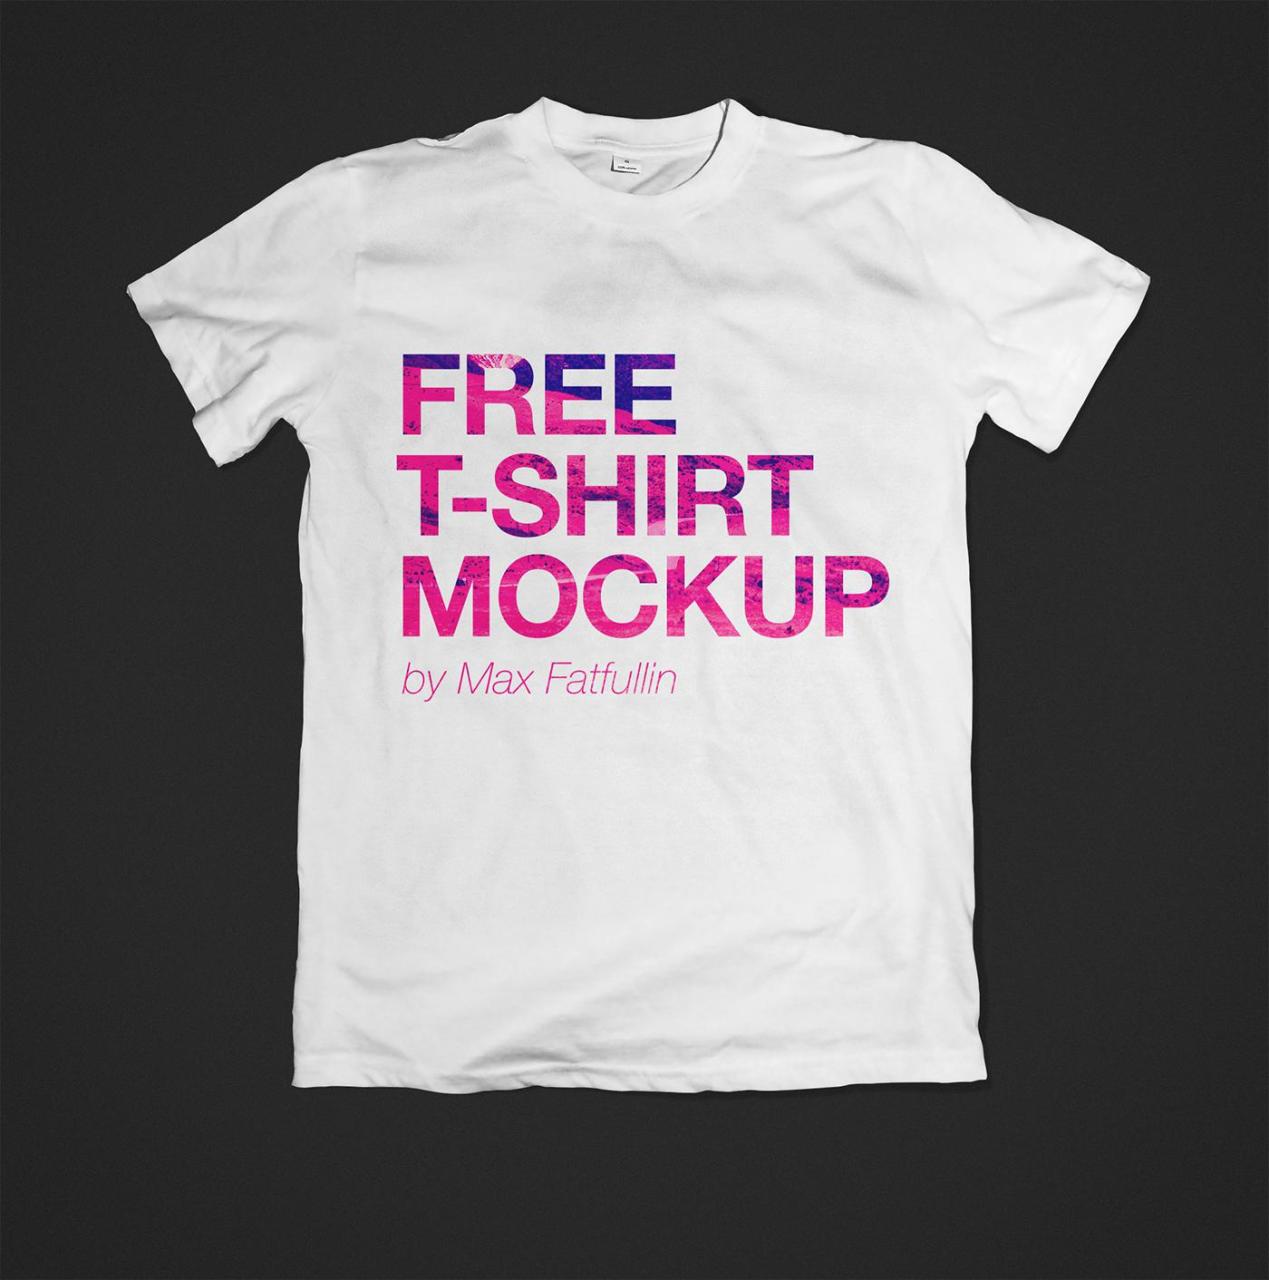 Mockups For T Shirts